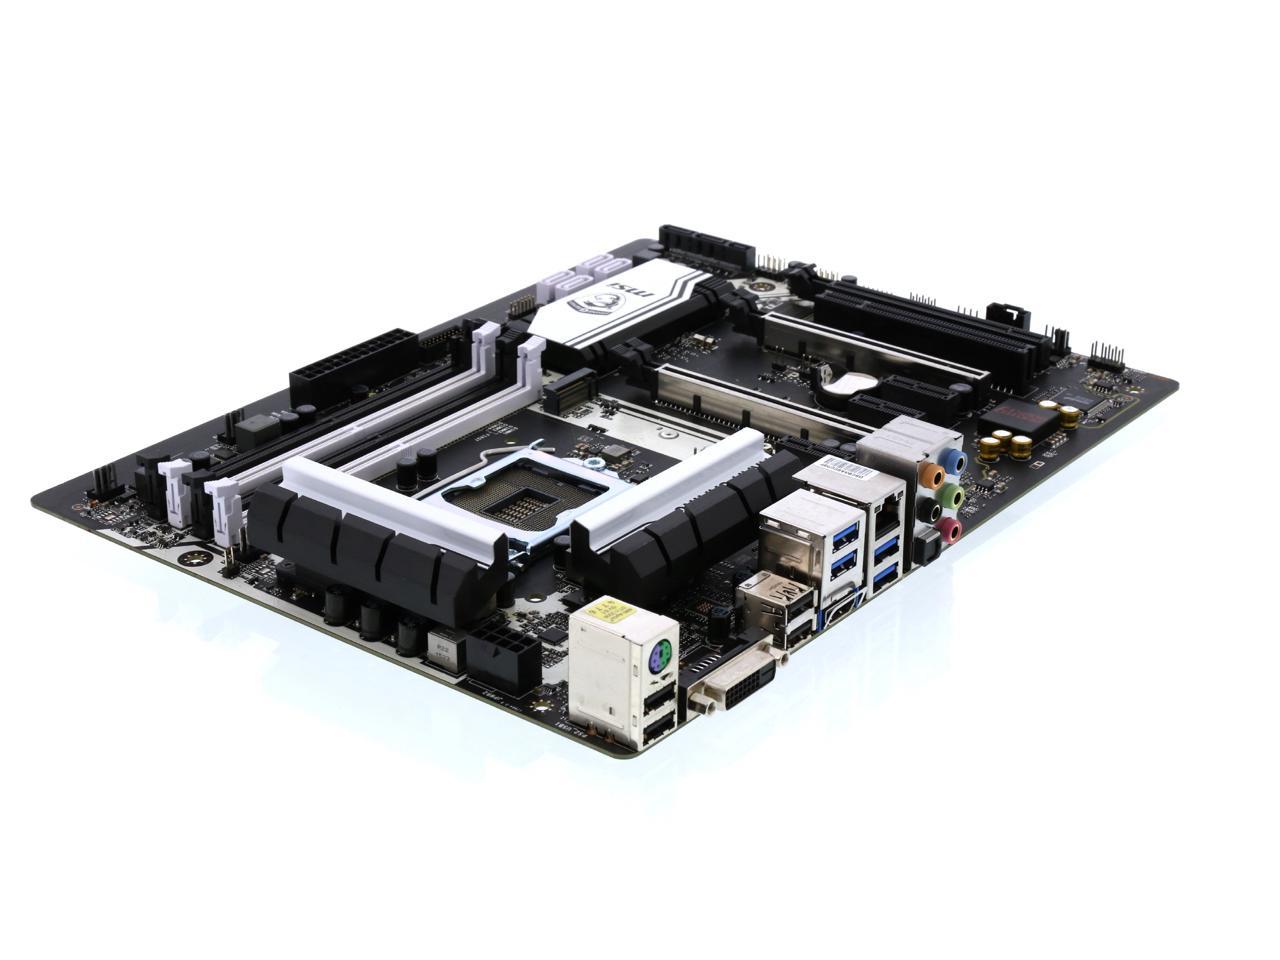 MSI MSI Gaming Z170 Krait Gaming LGA 1151 Intel Z170 HDMI SATA 6Gb/s USB  3.0 ATX Intel Motherboard